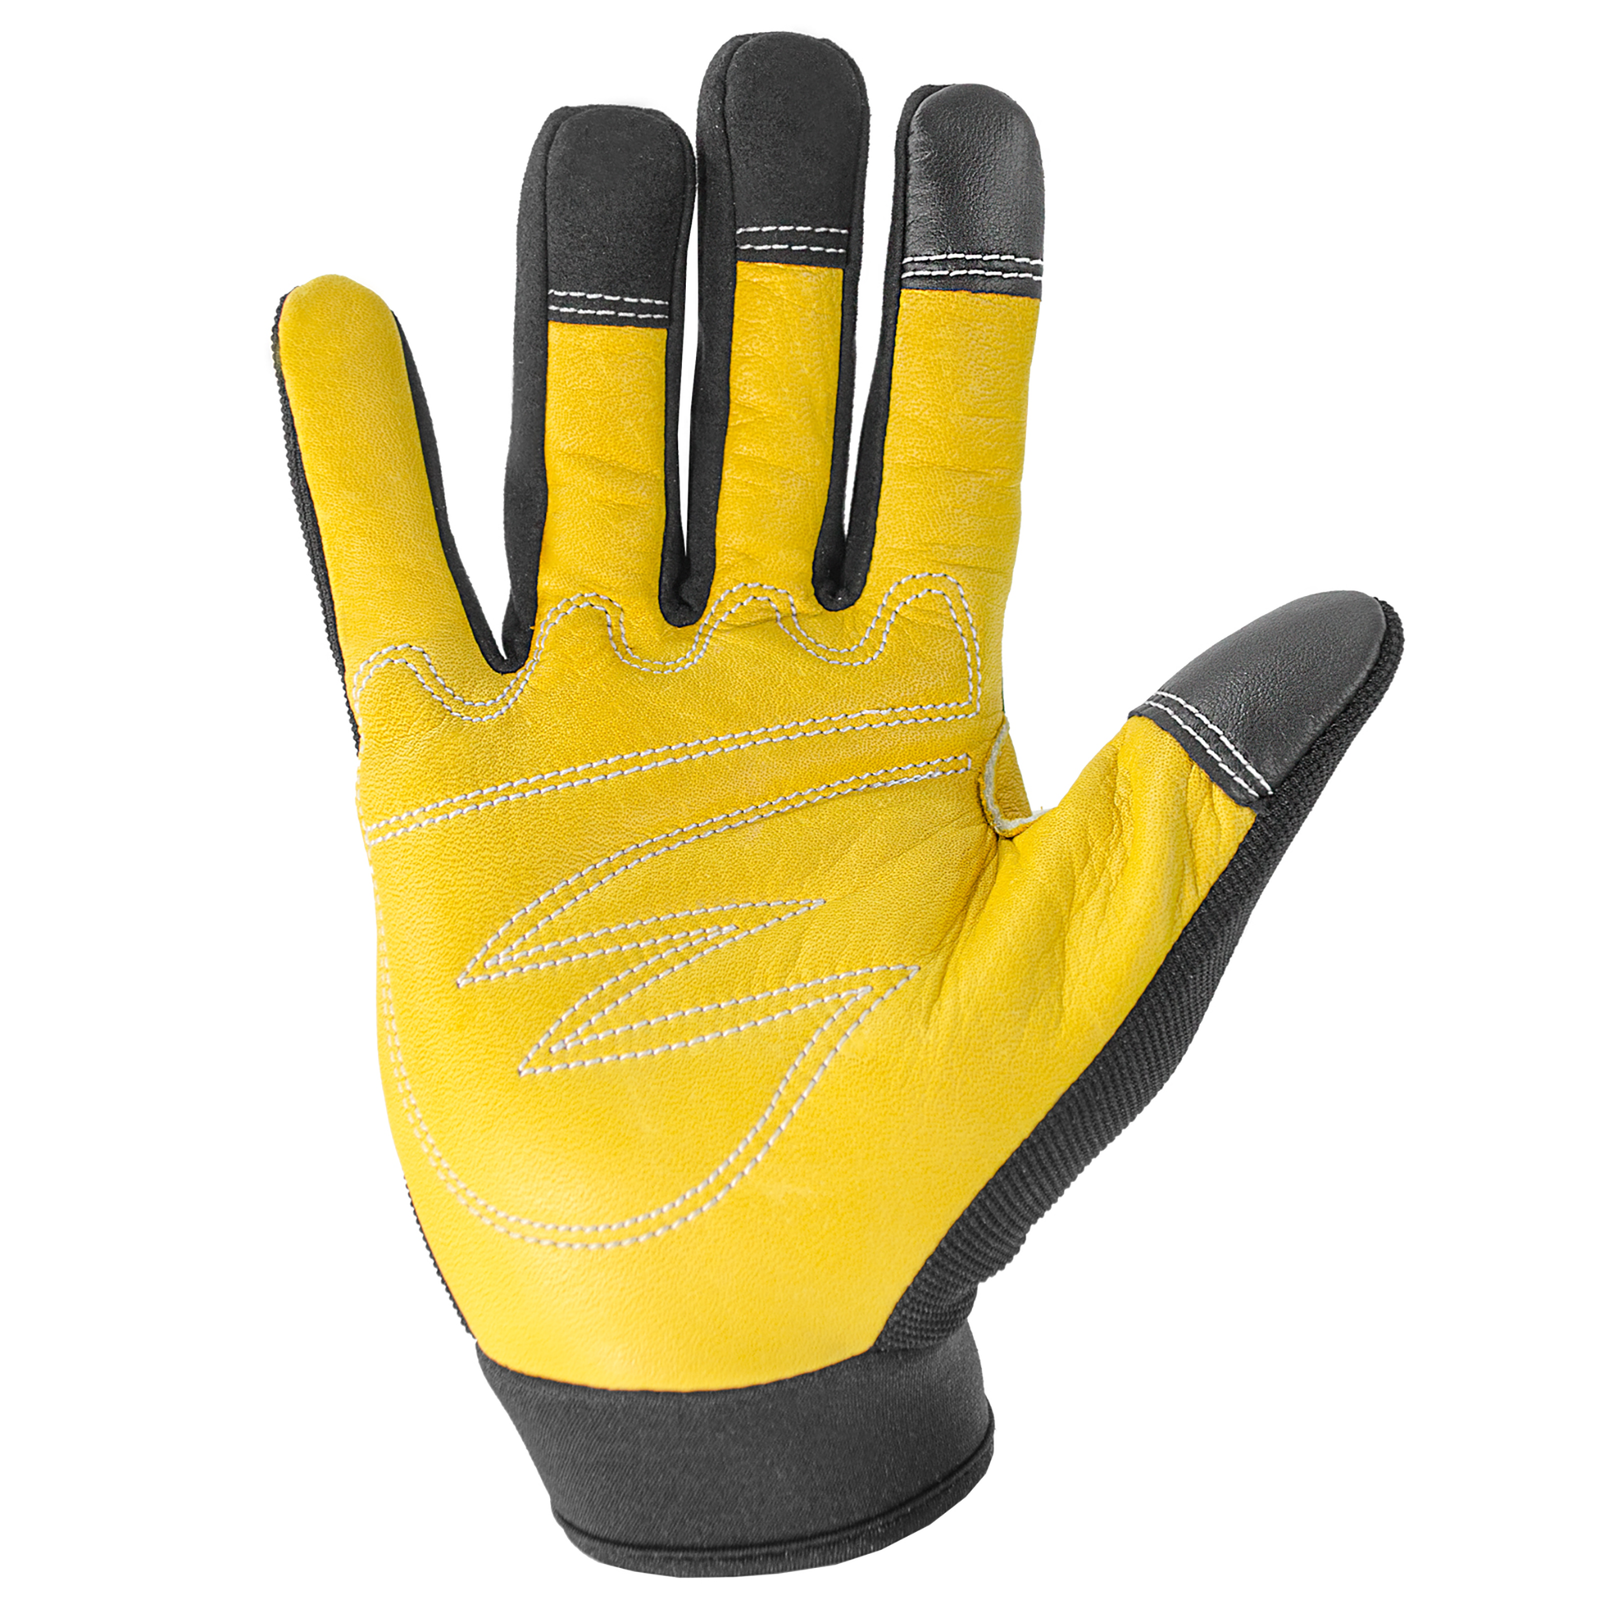 Yellow leather palm JORESTECH safety work glove for mechanics